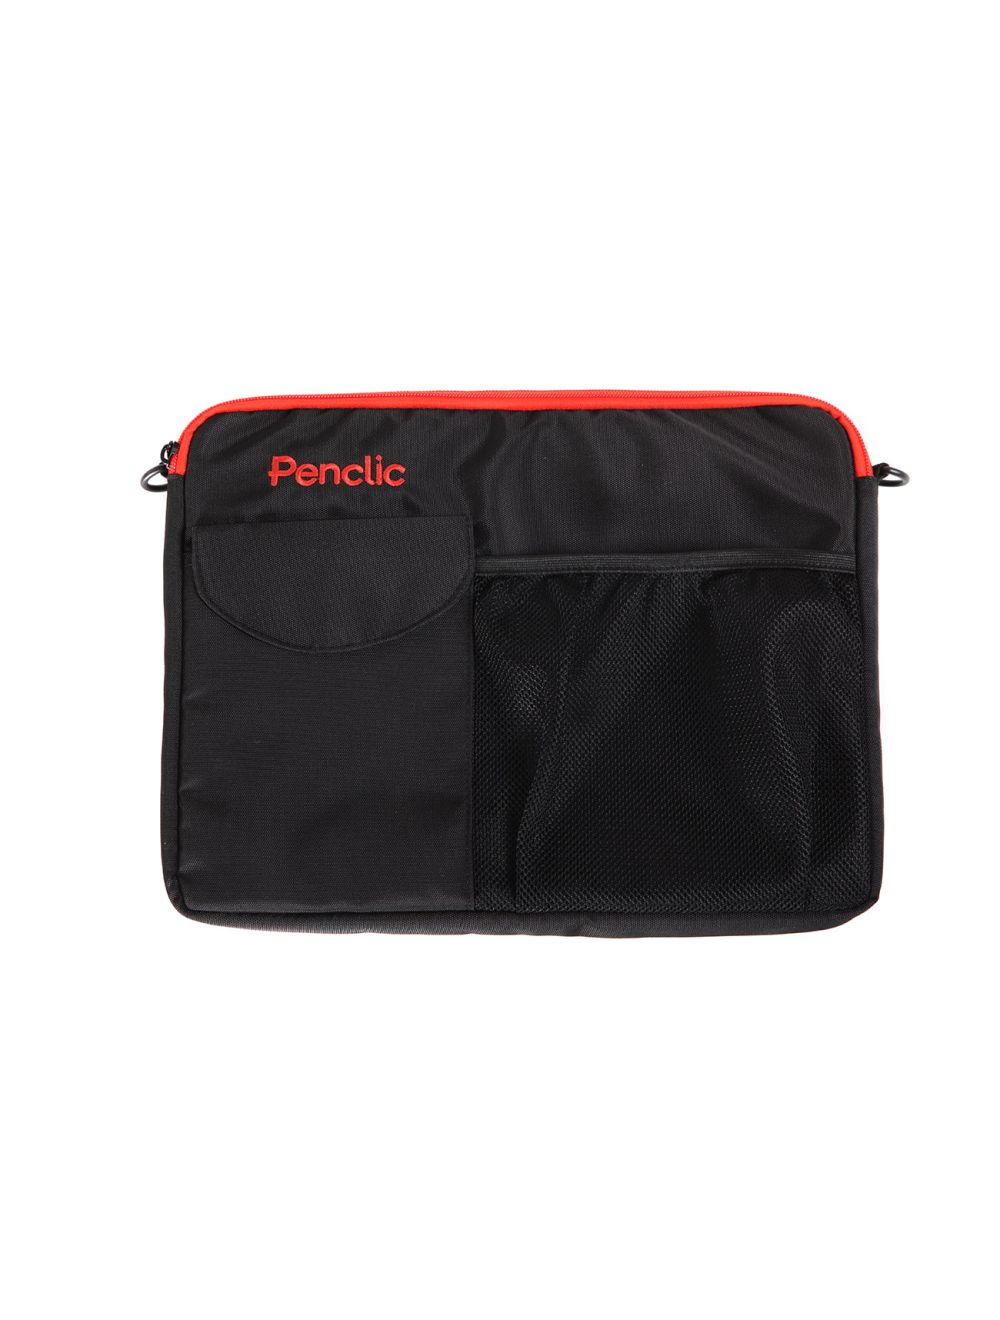 Penclic Accessory Bag